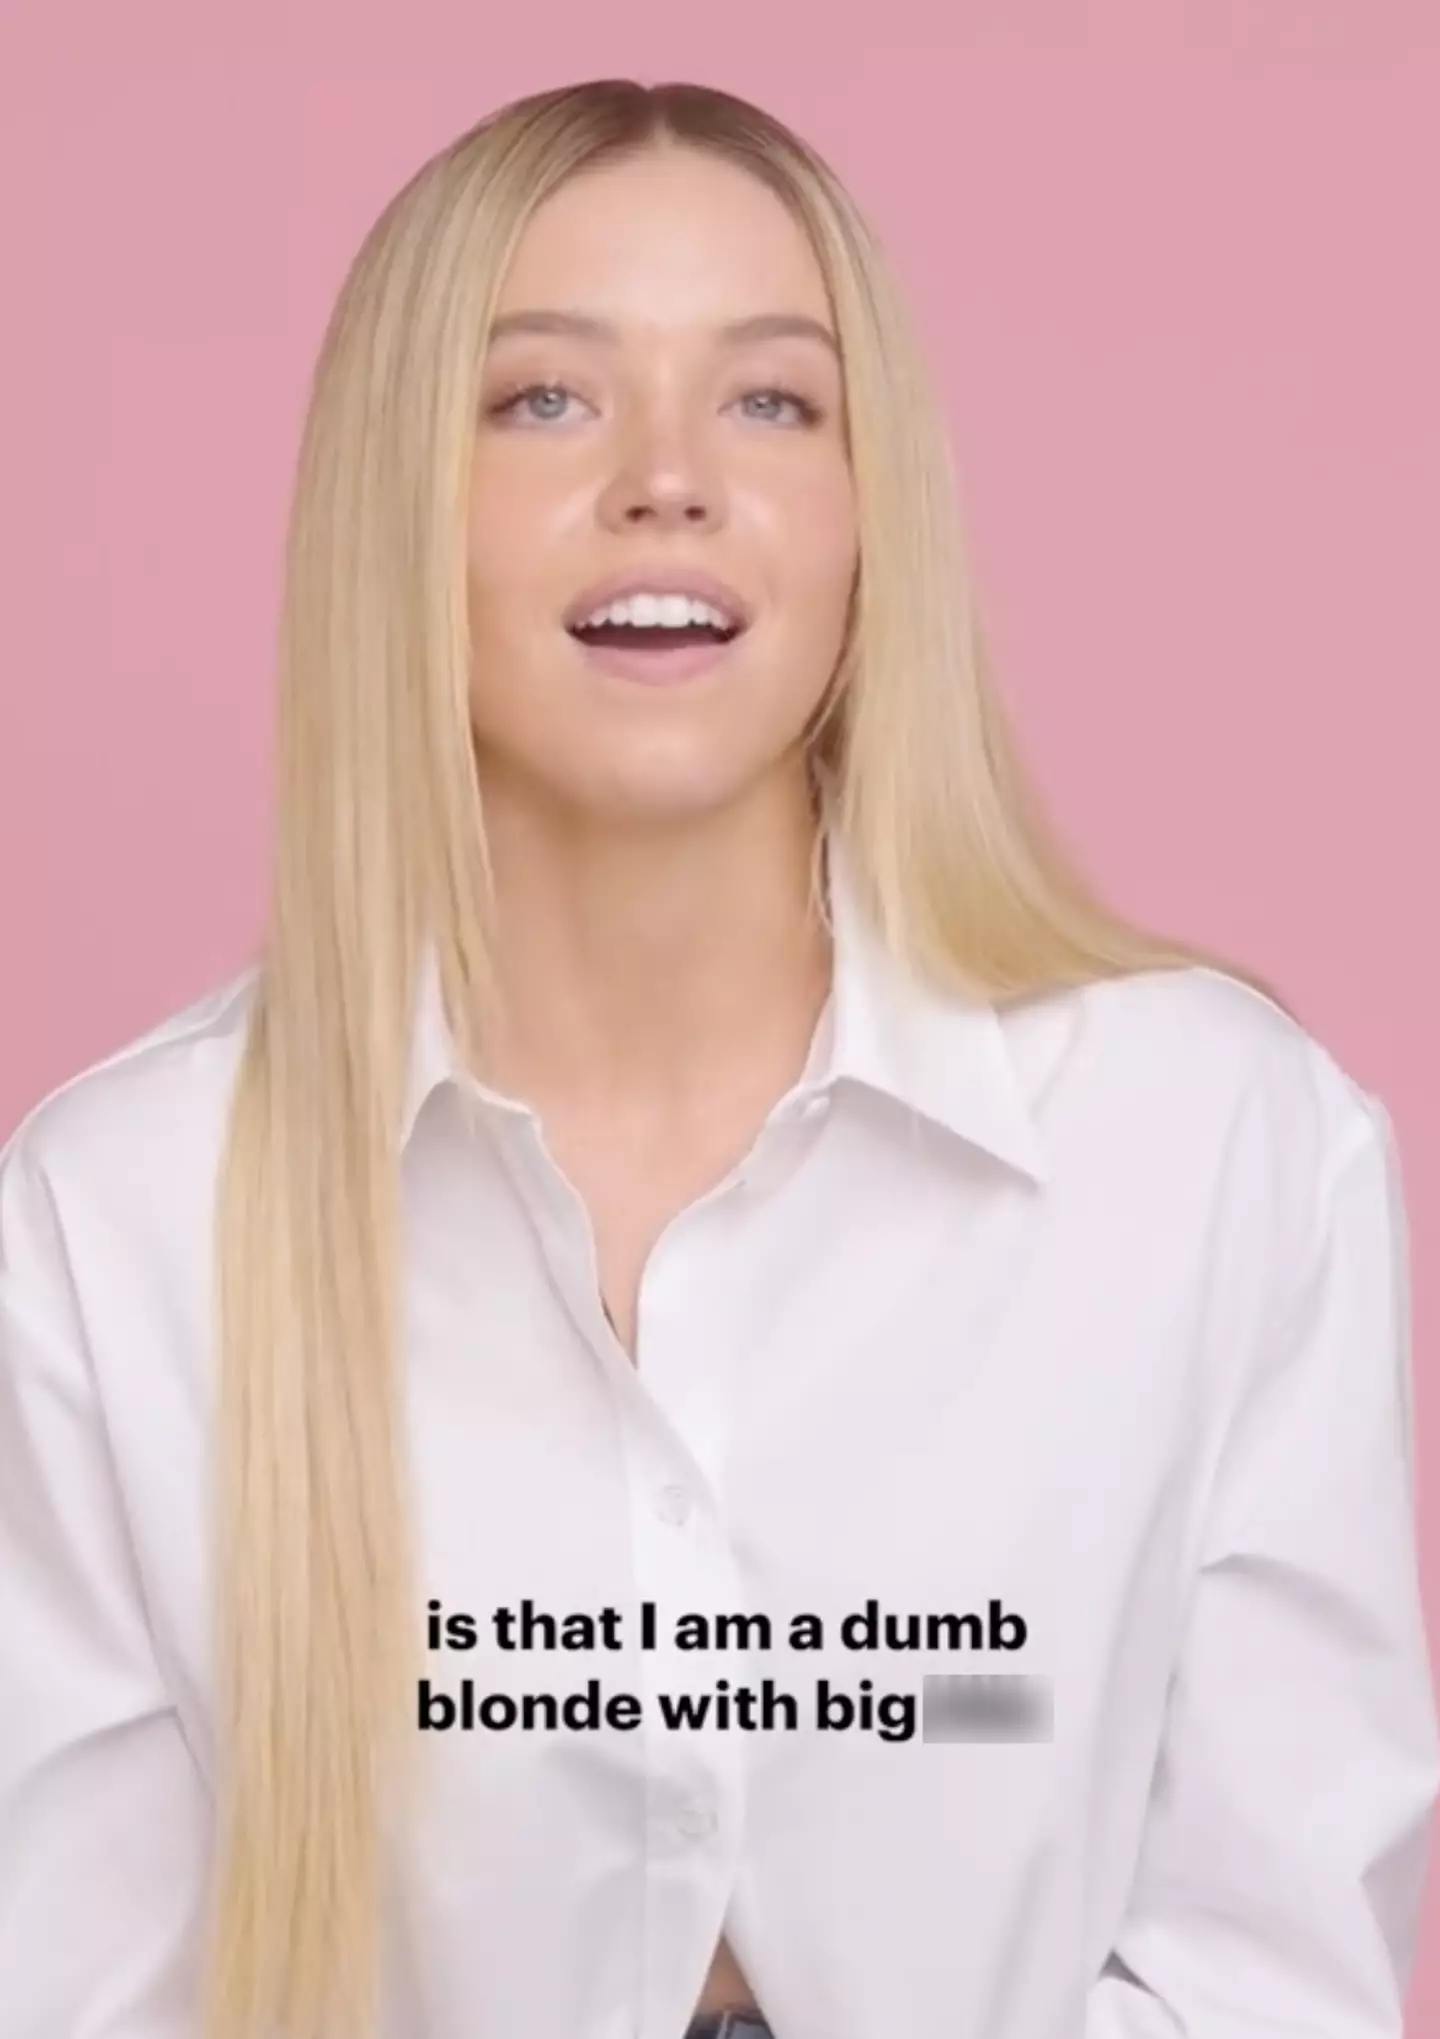 Sydney Sweeney addressed her 'dumb blond' stereotype.